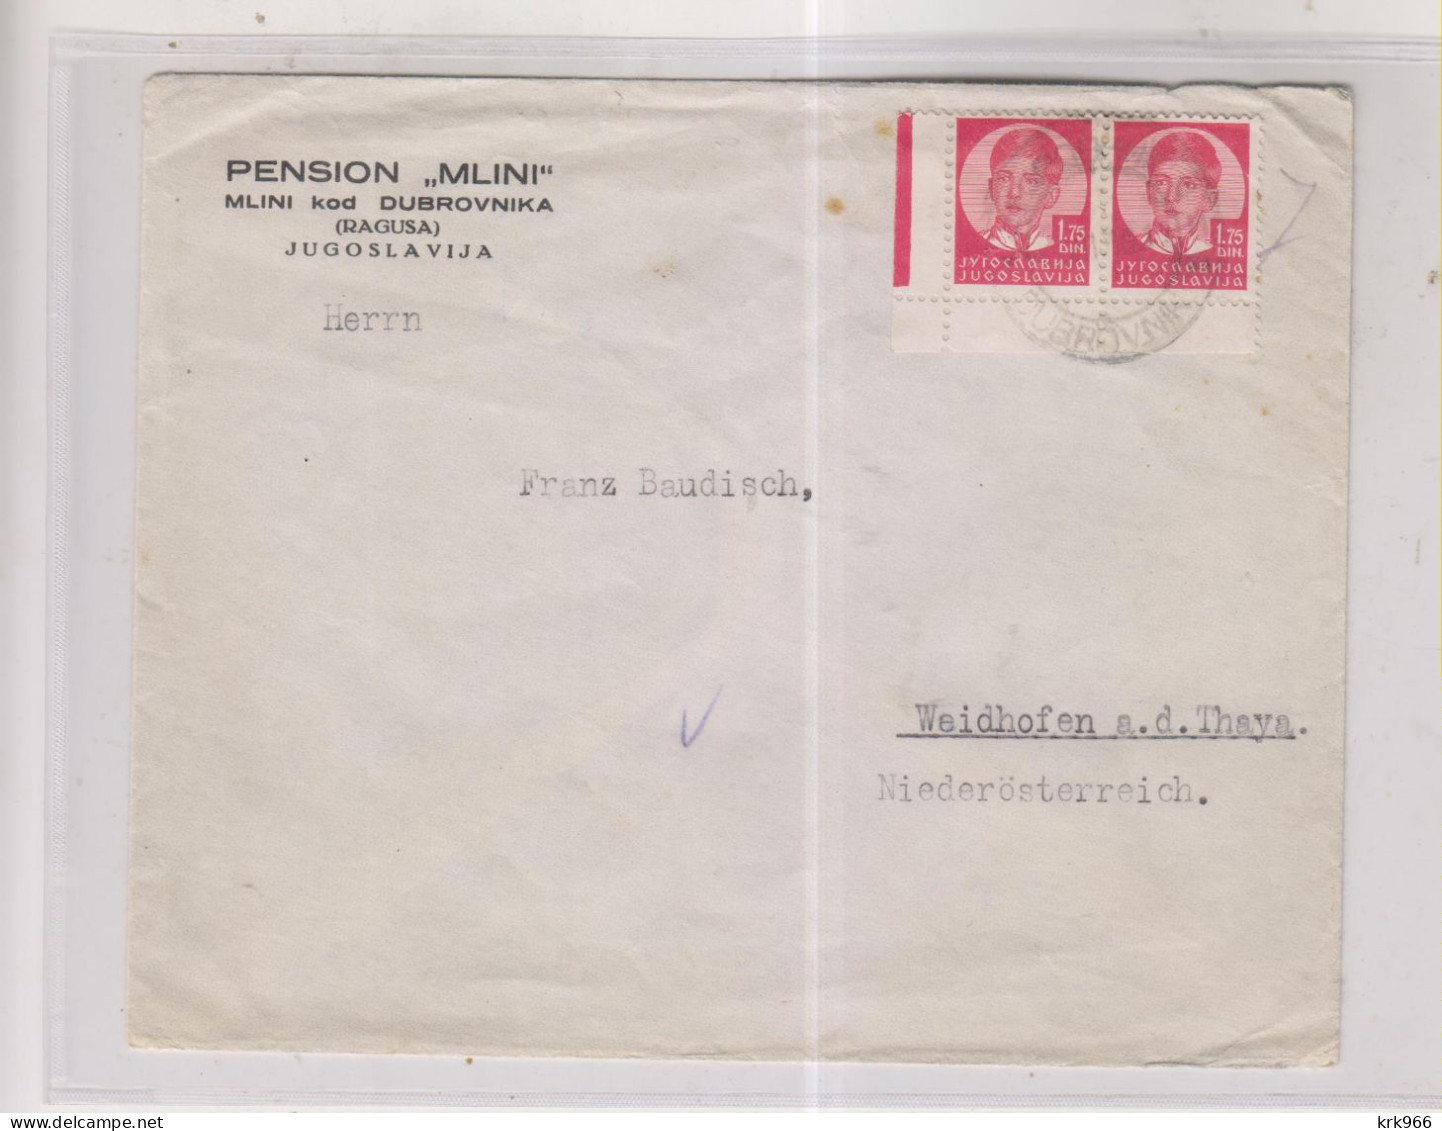 YUGOSLAVIA 1936 DUBROVNIK Mice Cover To Austria PENSION MLINI - Lettres & Documents